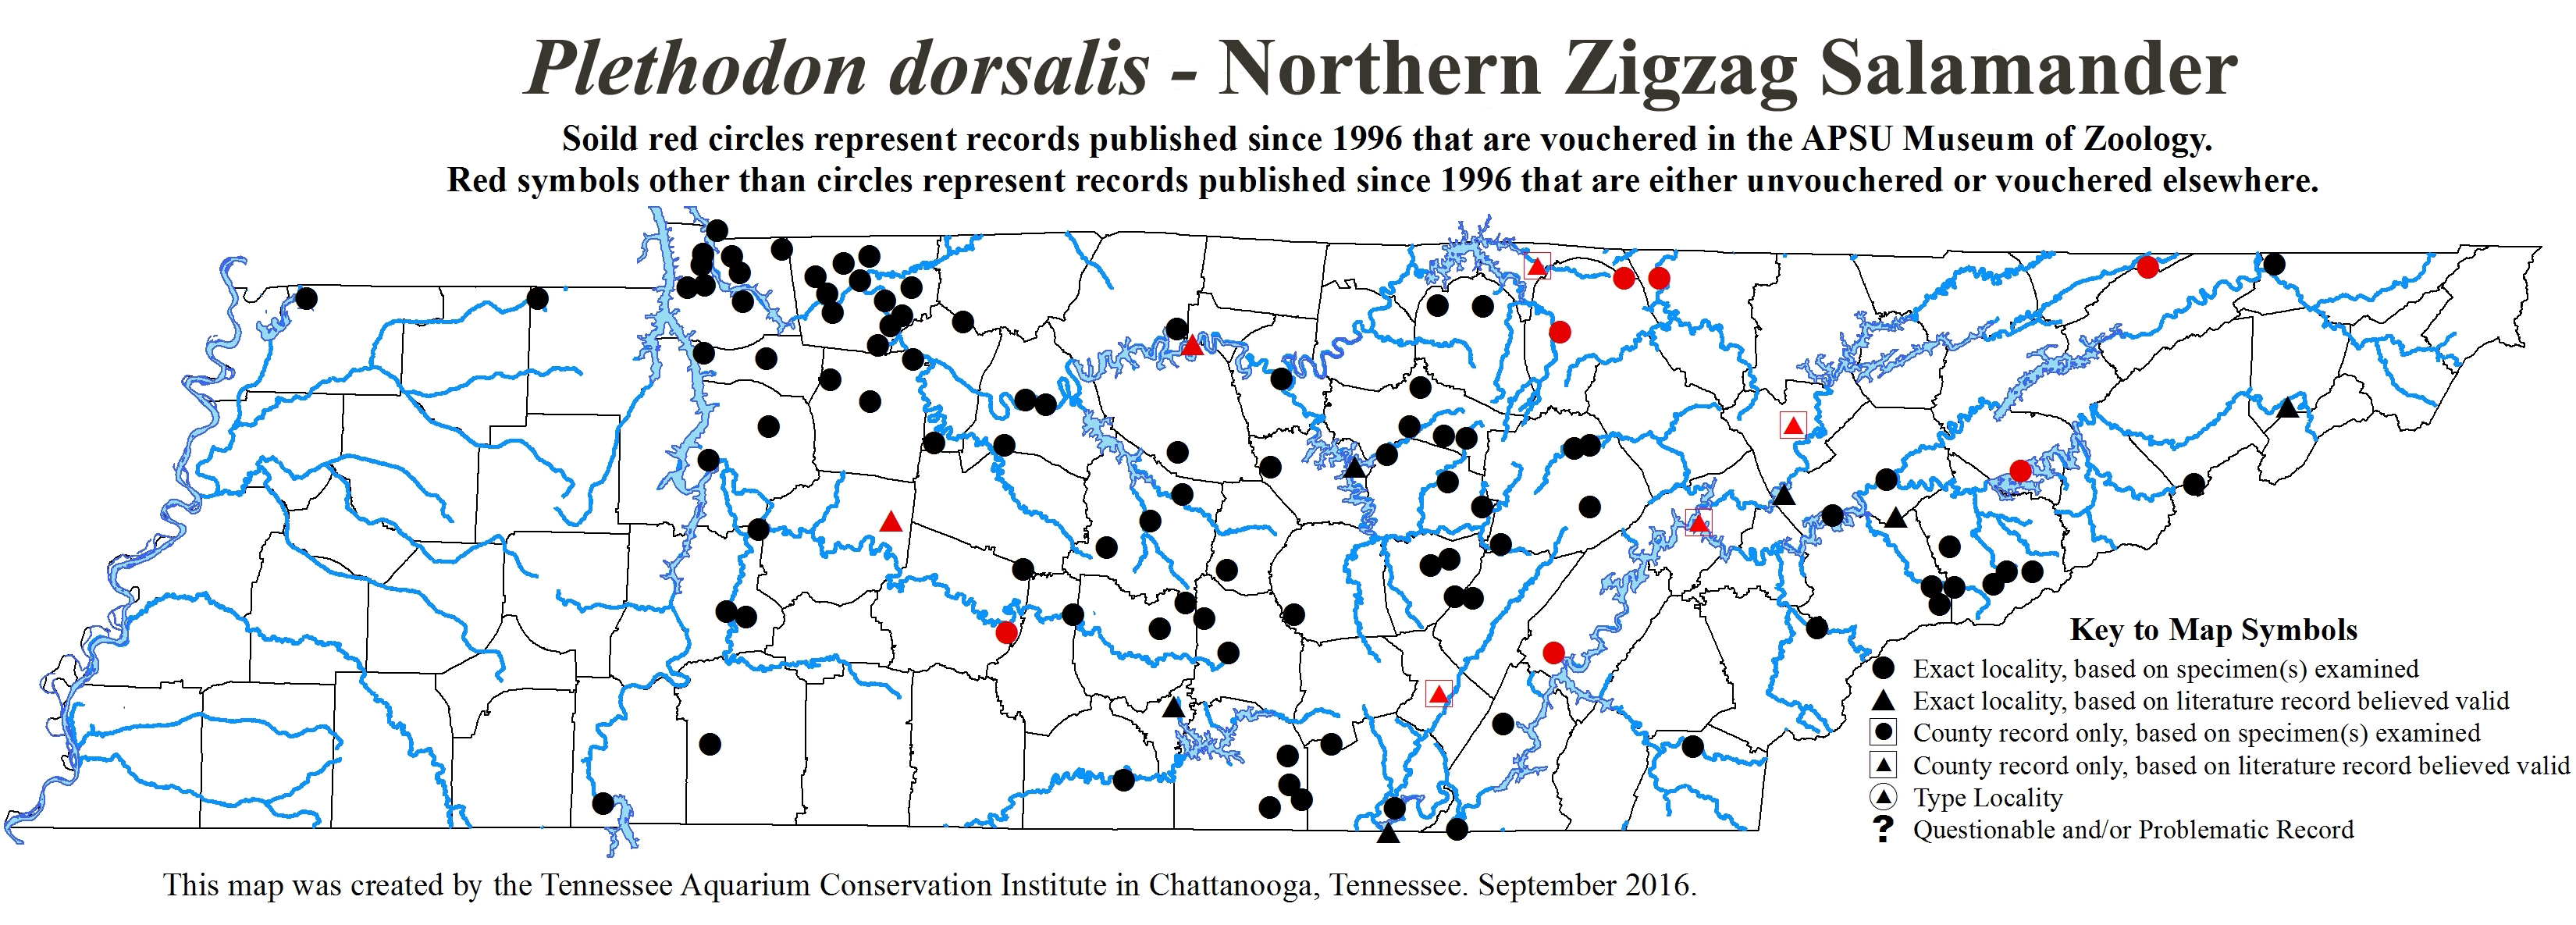 New Distribution Map - Plethodon dorsalis Cope - Northern Zigzag Salamander